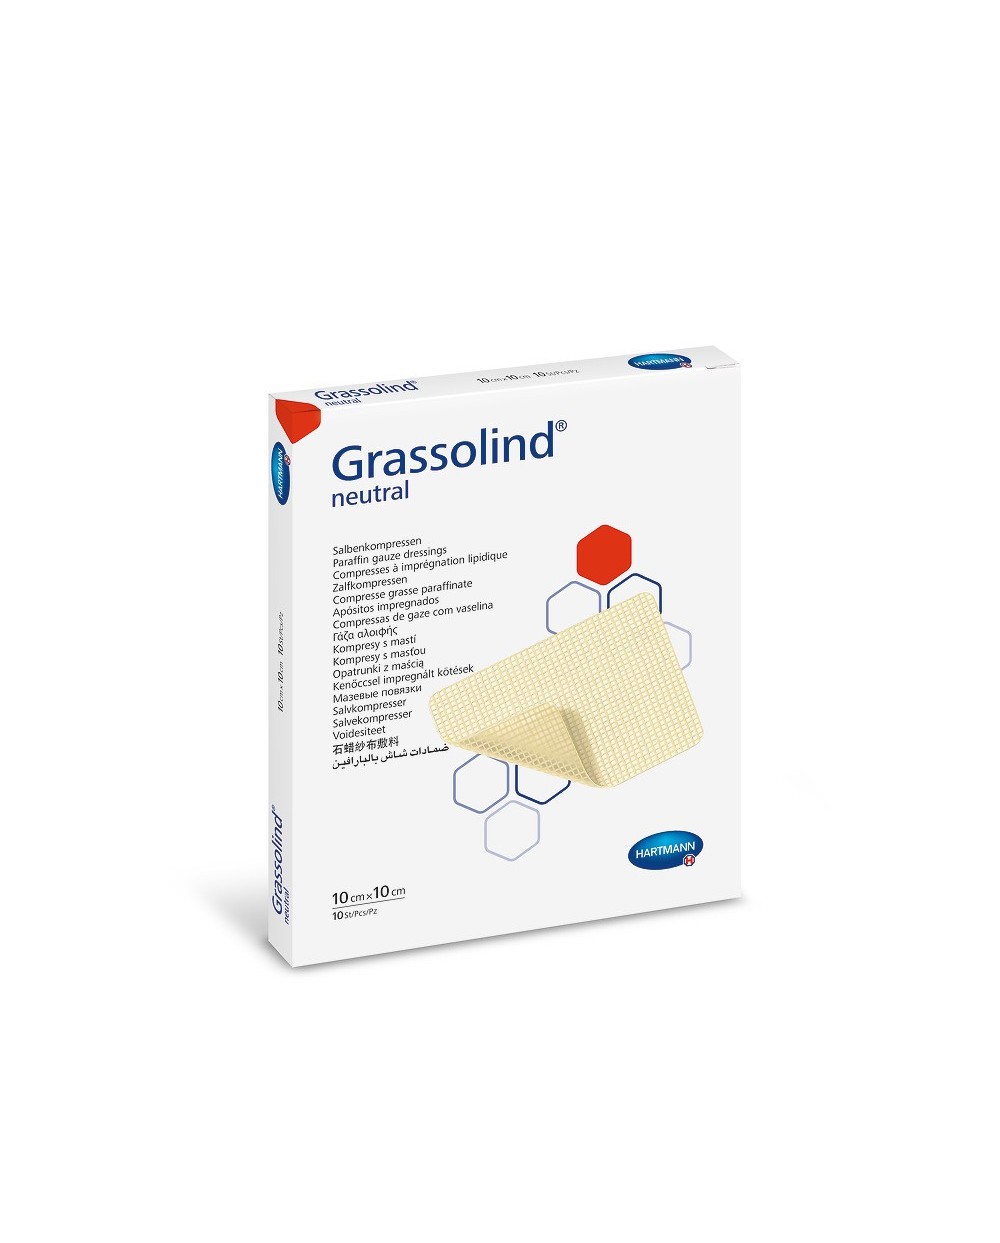 Grassolind - 3